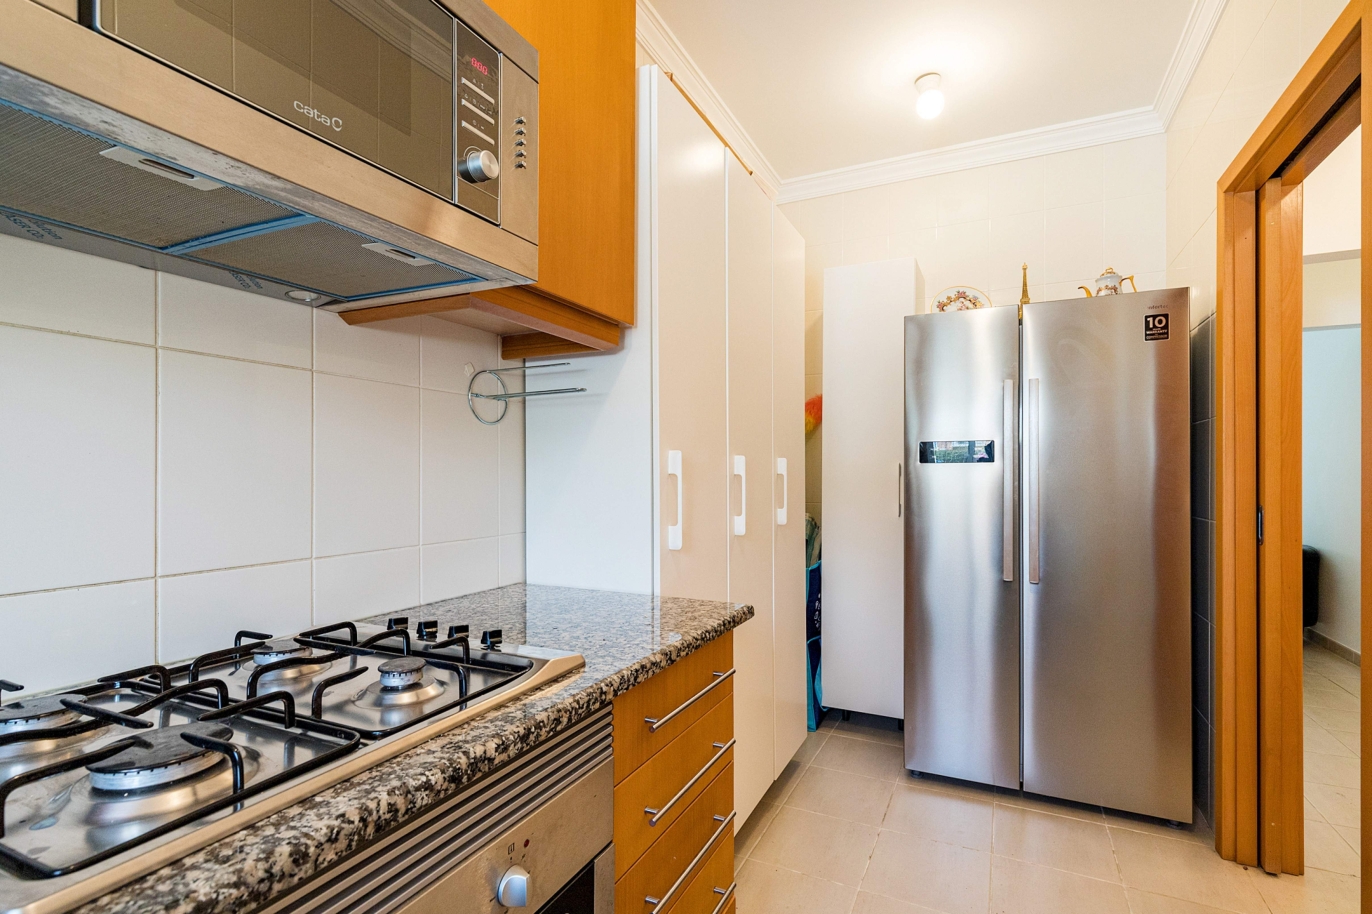 Apartamento T2, em condominio, para venda, Albufeira, Algarve_201452